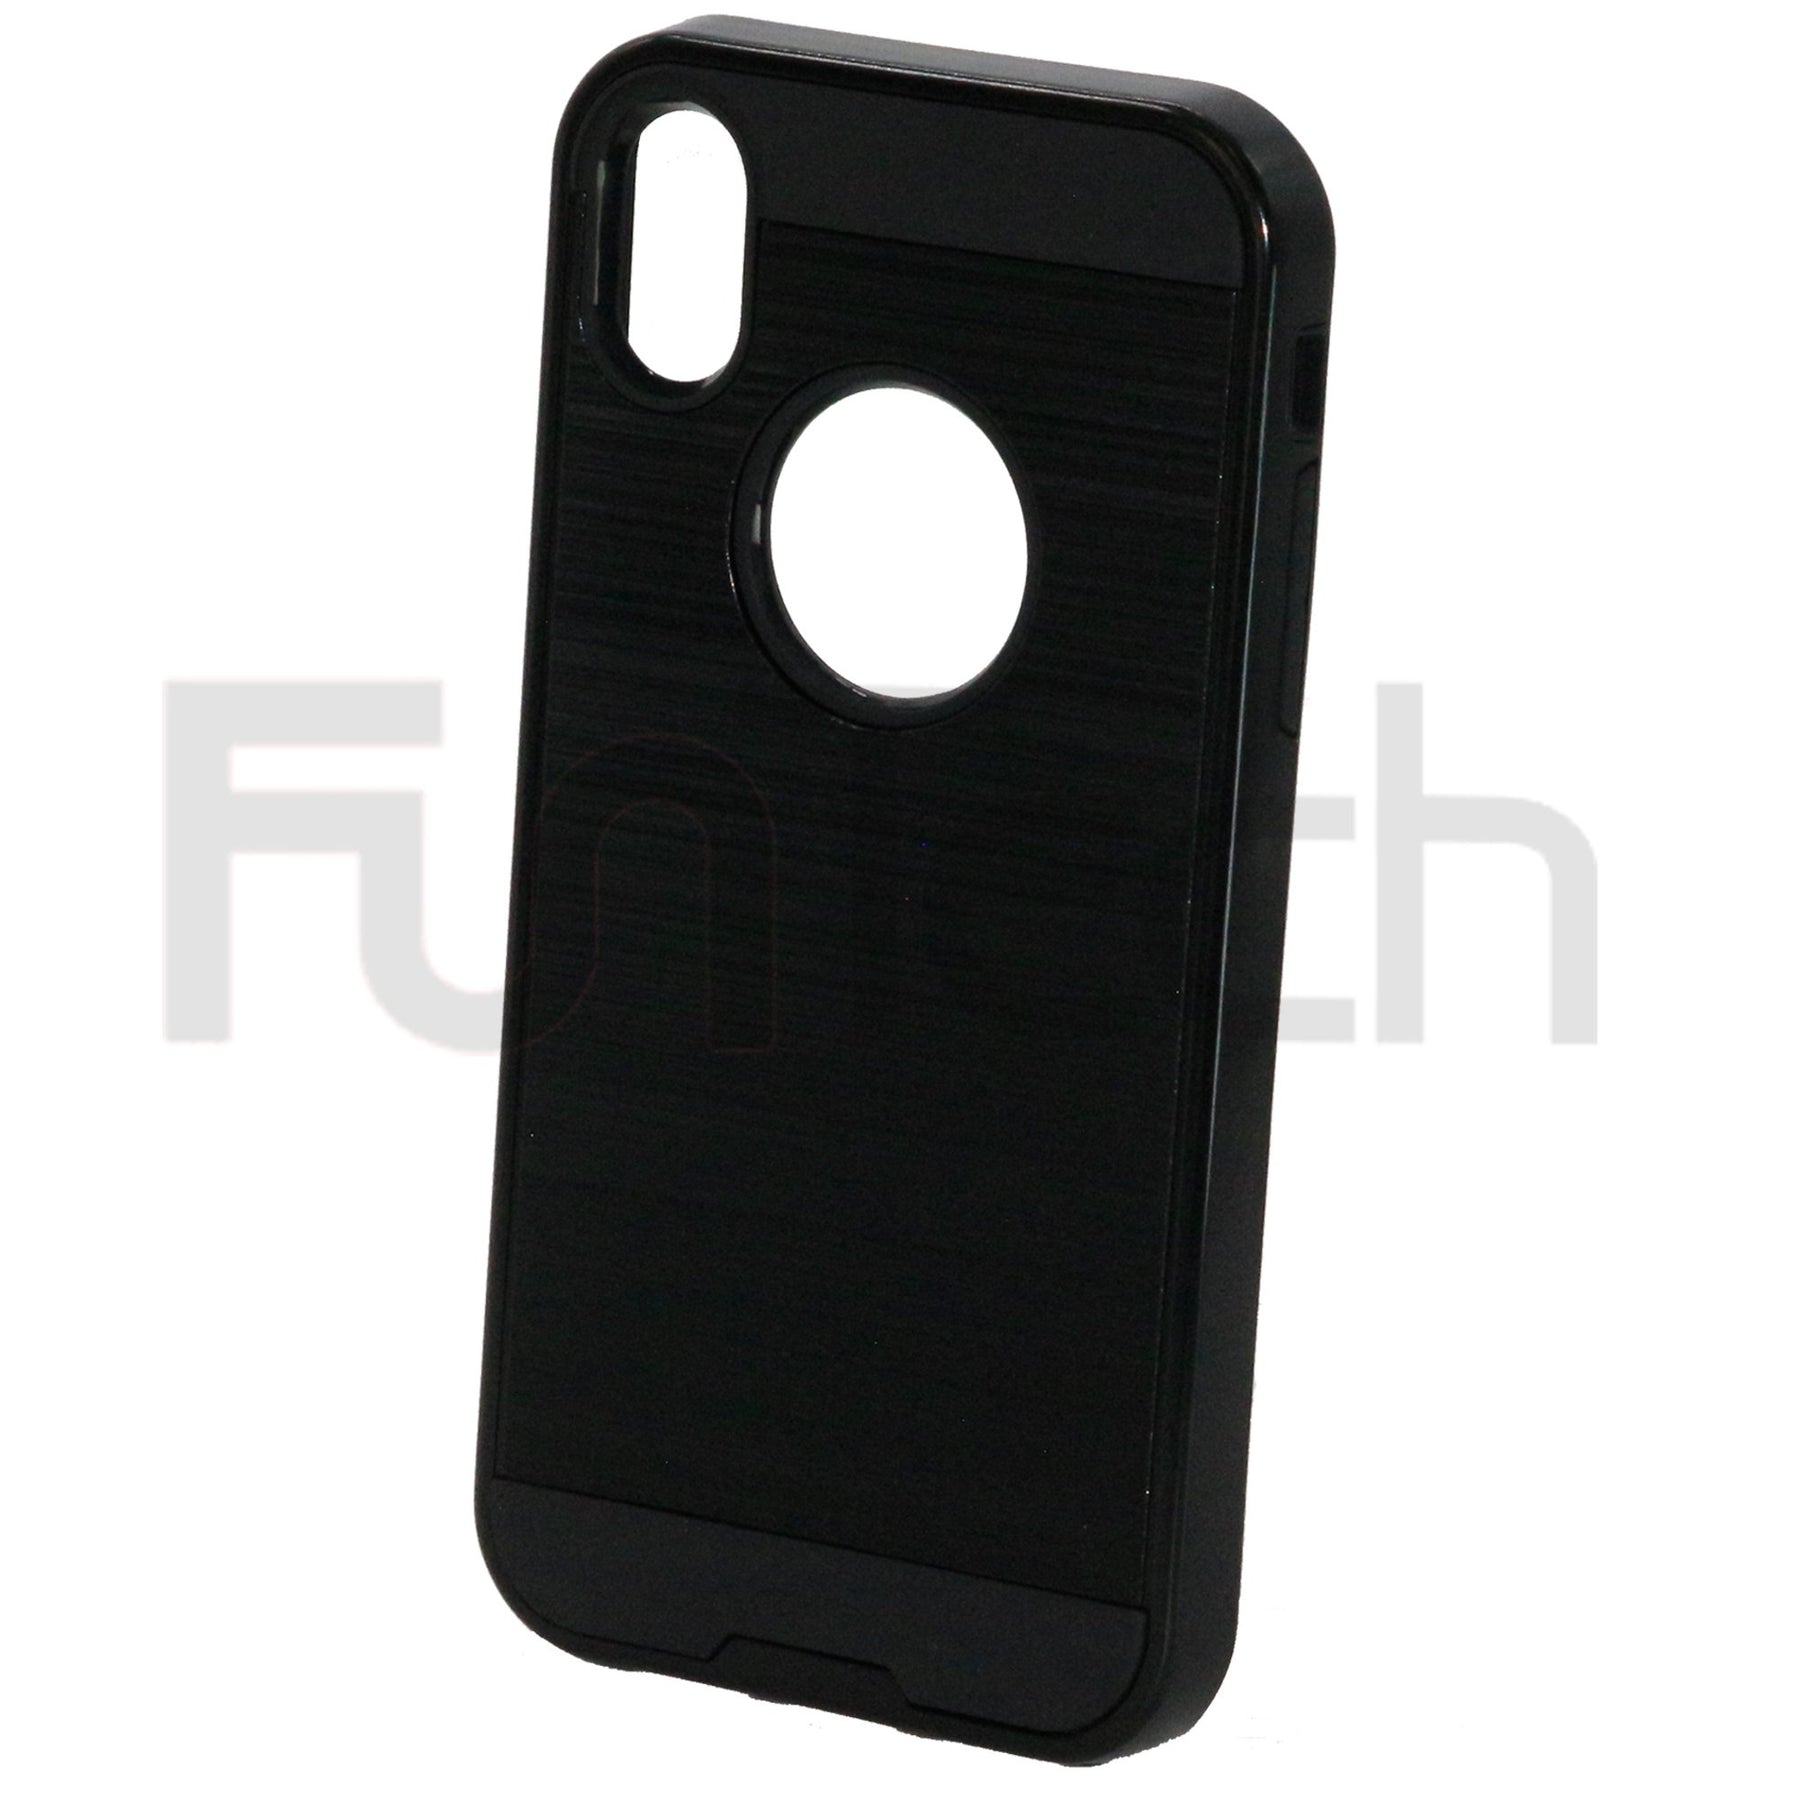 Apple iPhone XR Slim Armor Case Black